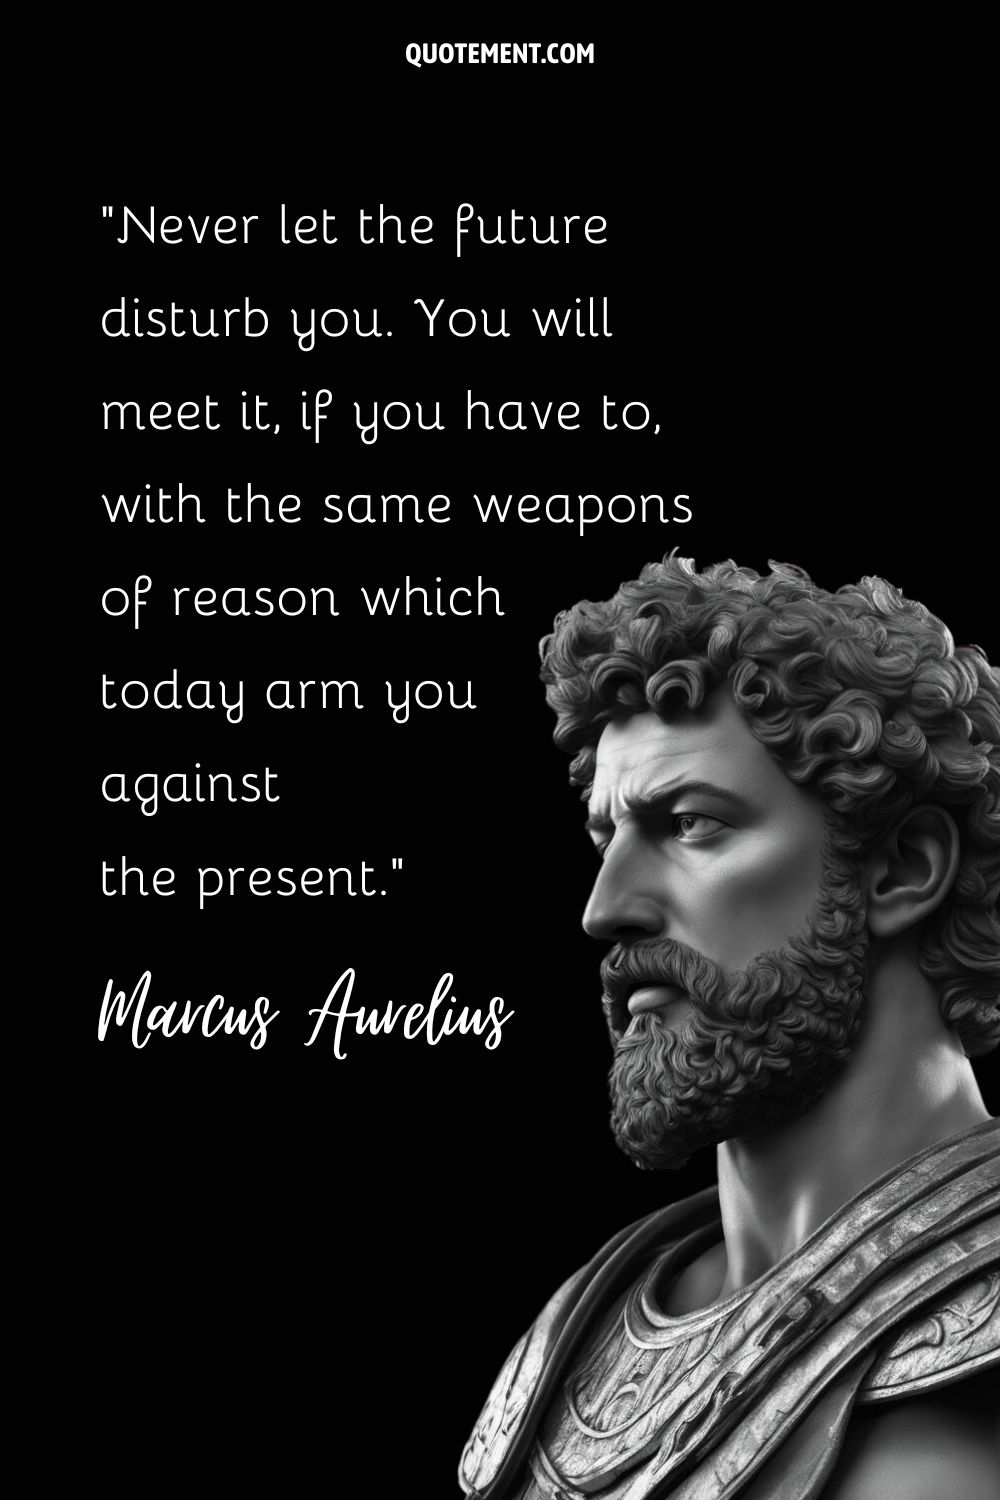 Timeless portrayal of Marcus Aurelius.
